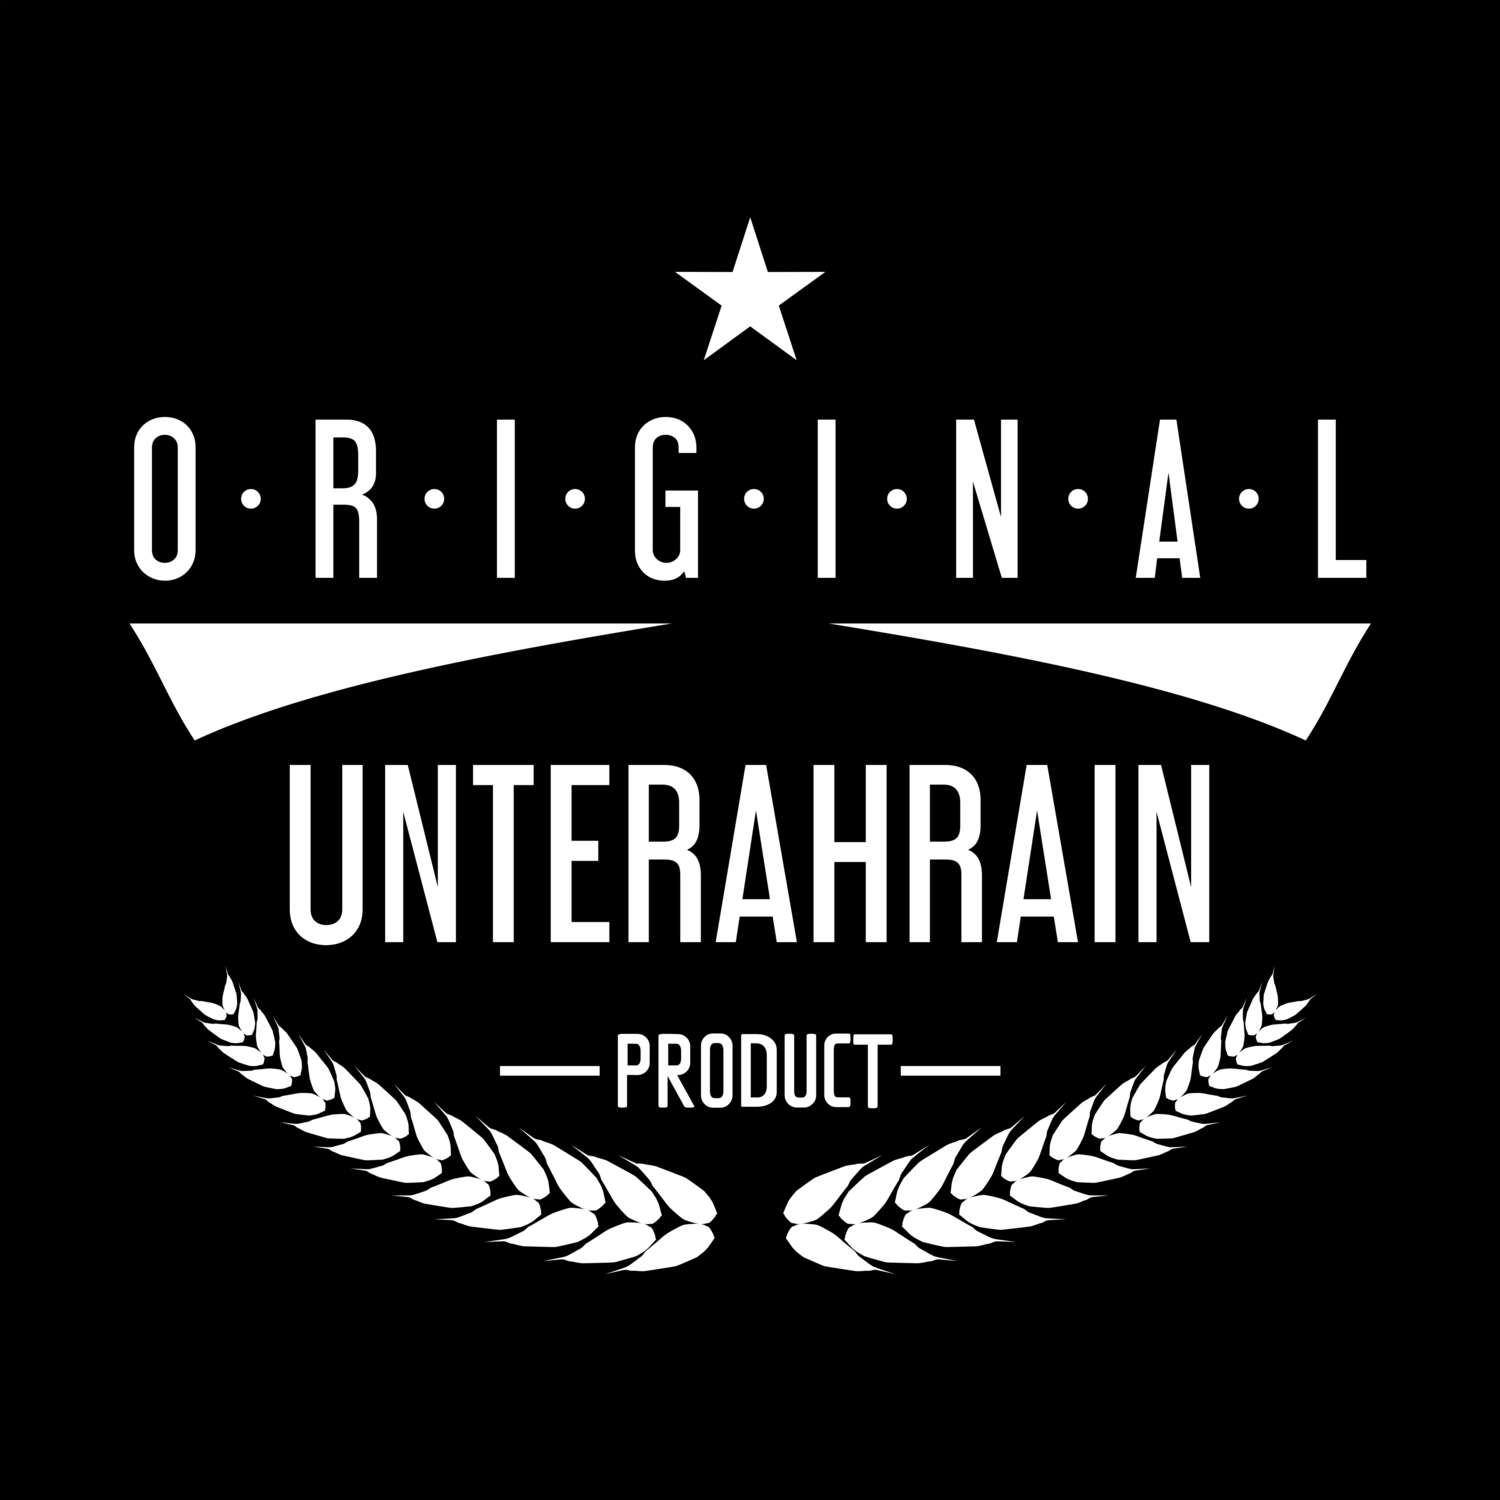 Unterahrain T-Shirt »Original Product«